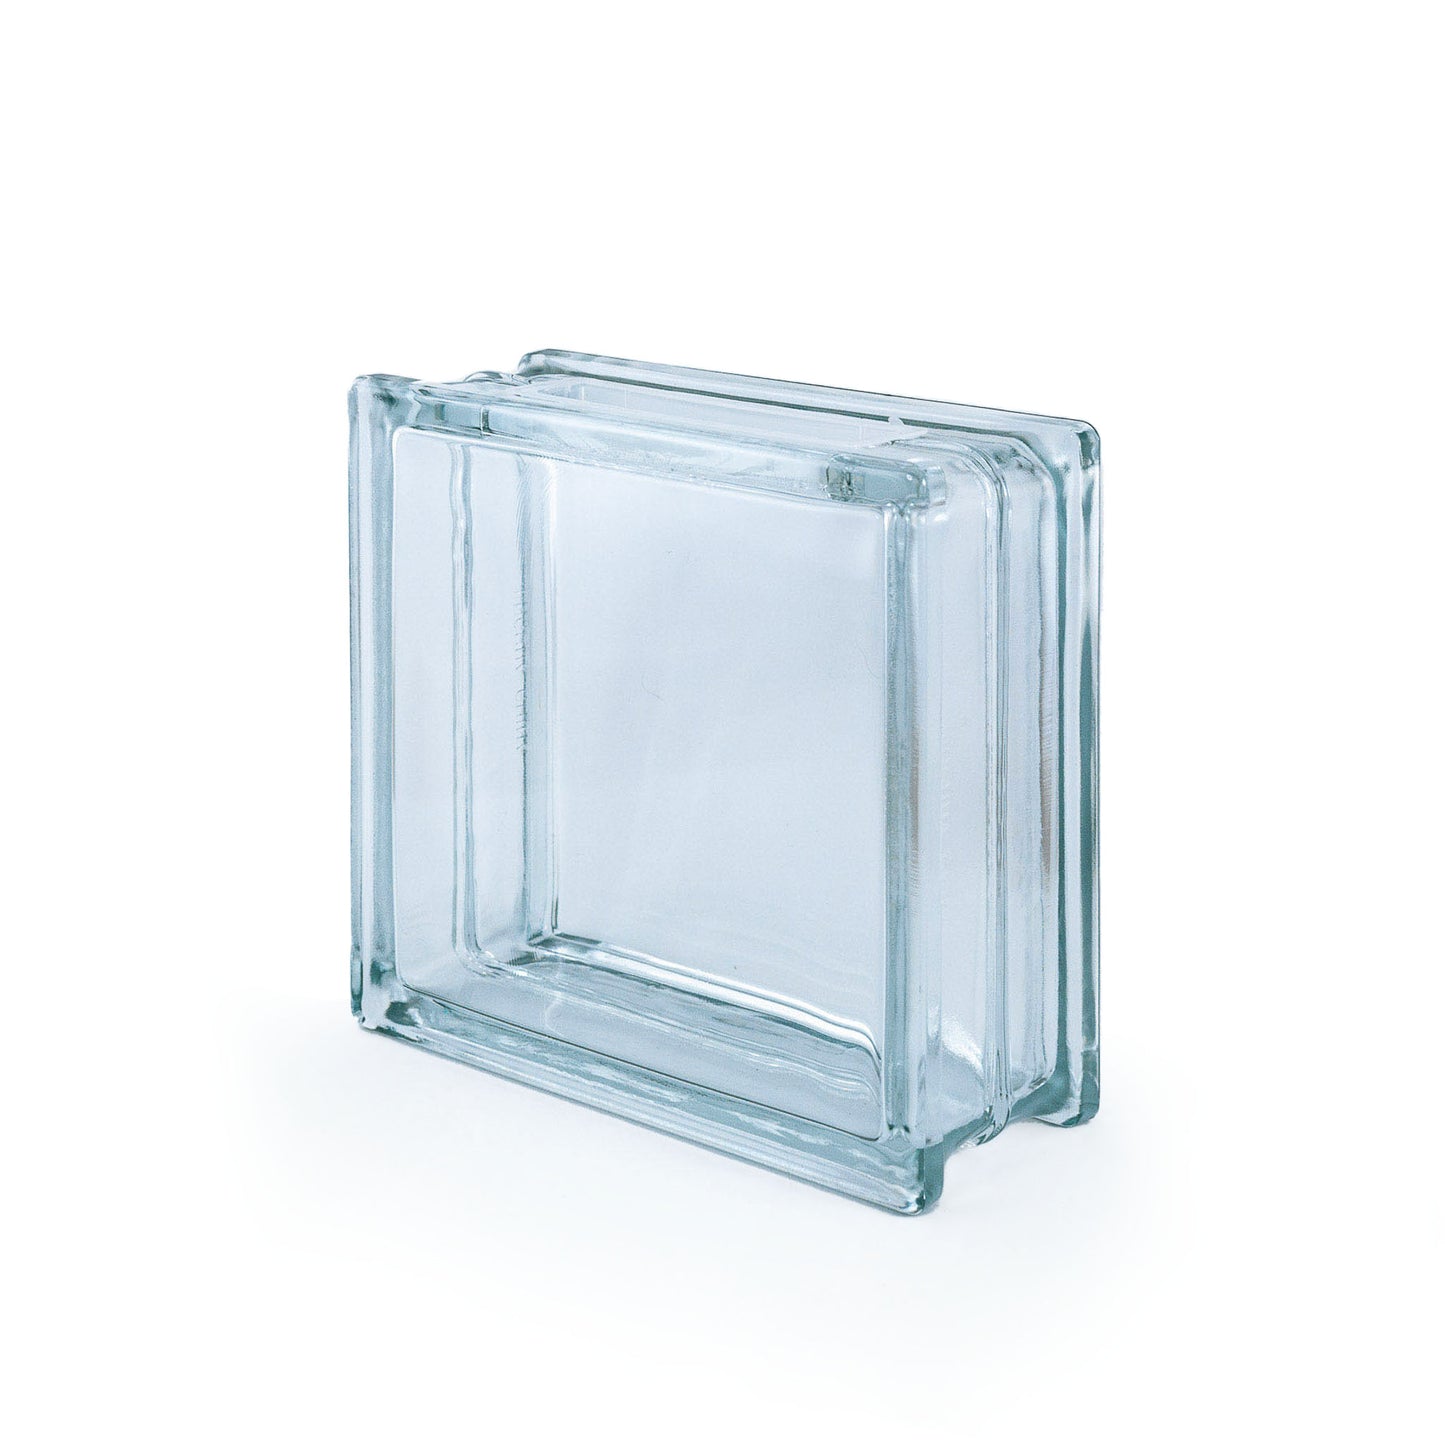 Glass brick Terrarium DIY kit